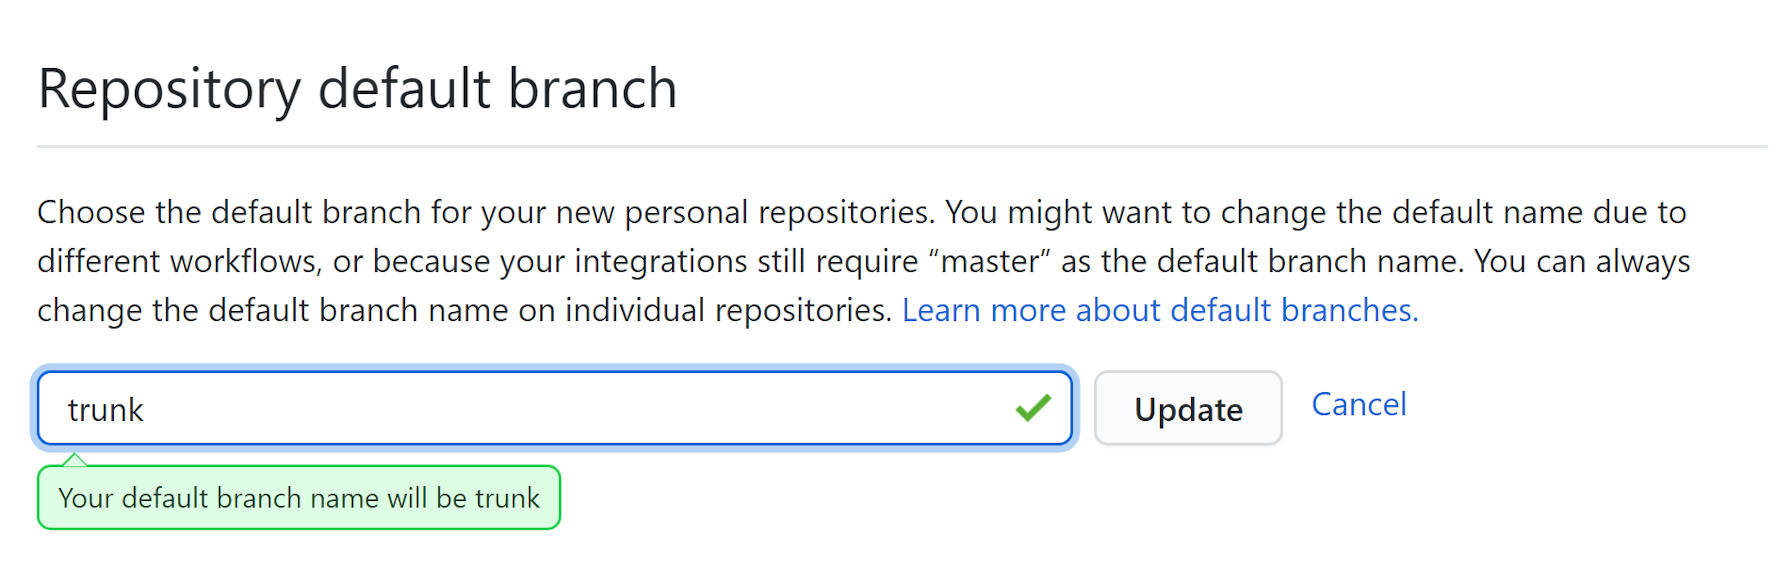 github-to-main-master-master-as-the-default-branch-on-all-new-repositories-starting-next-month GitHub使用'Main'代替'Master'作為默認分支從下個月開始在所有新存儲庫上運行